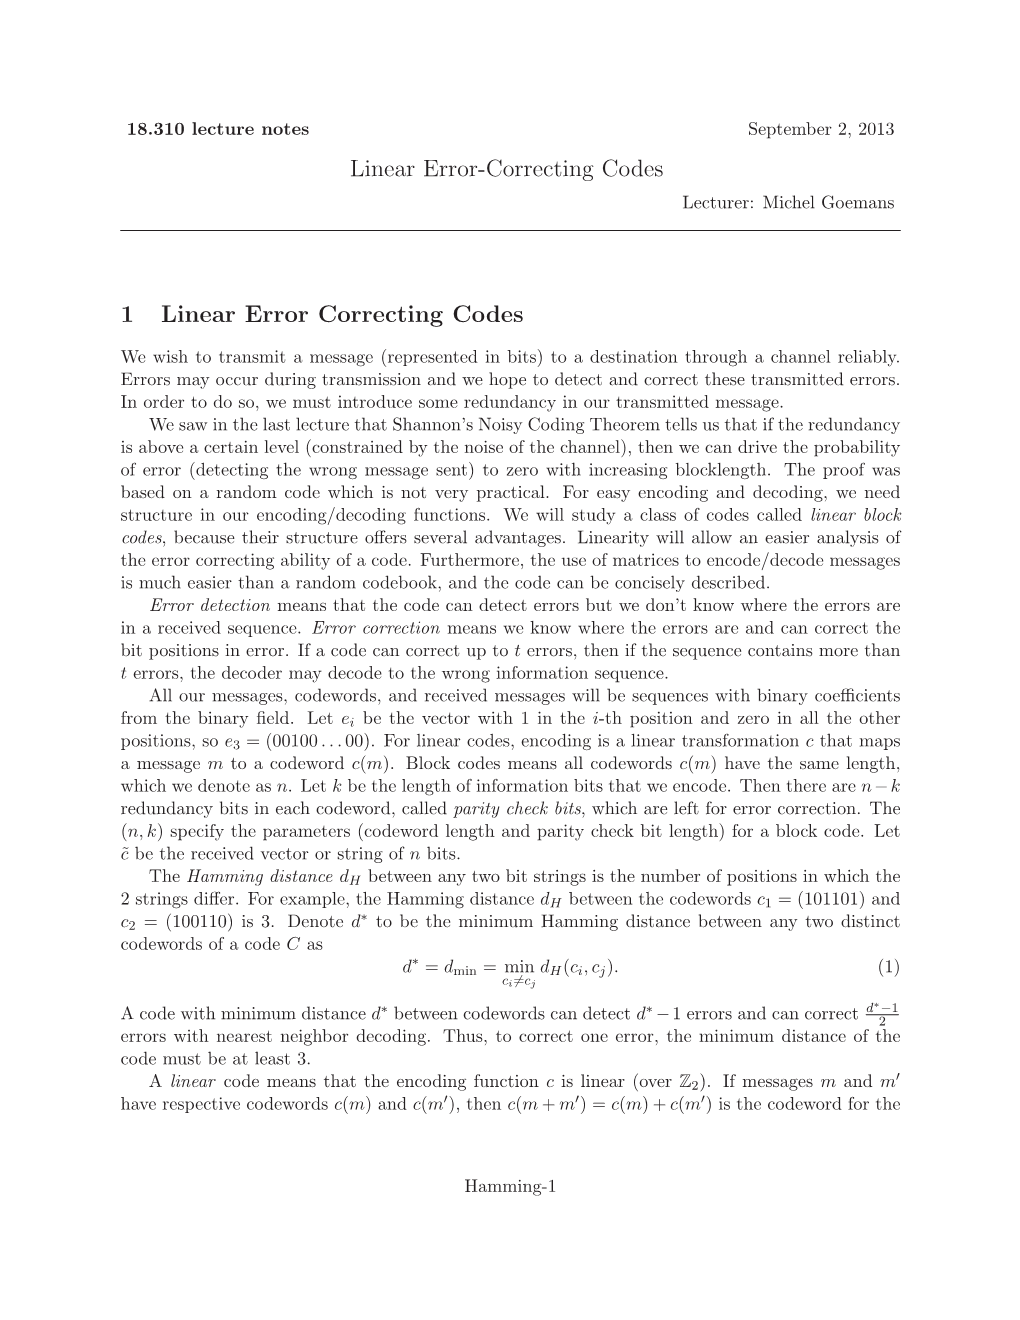 Principles of Discrete Applied Mathematics, Linear Error-Correcting Codes Notes